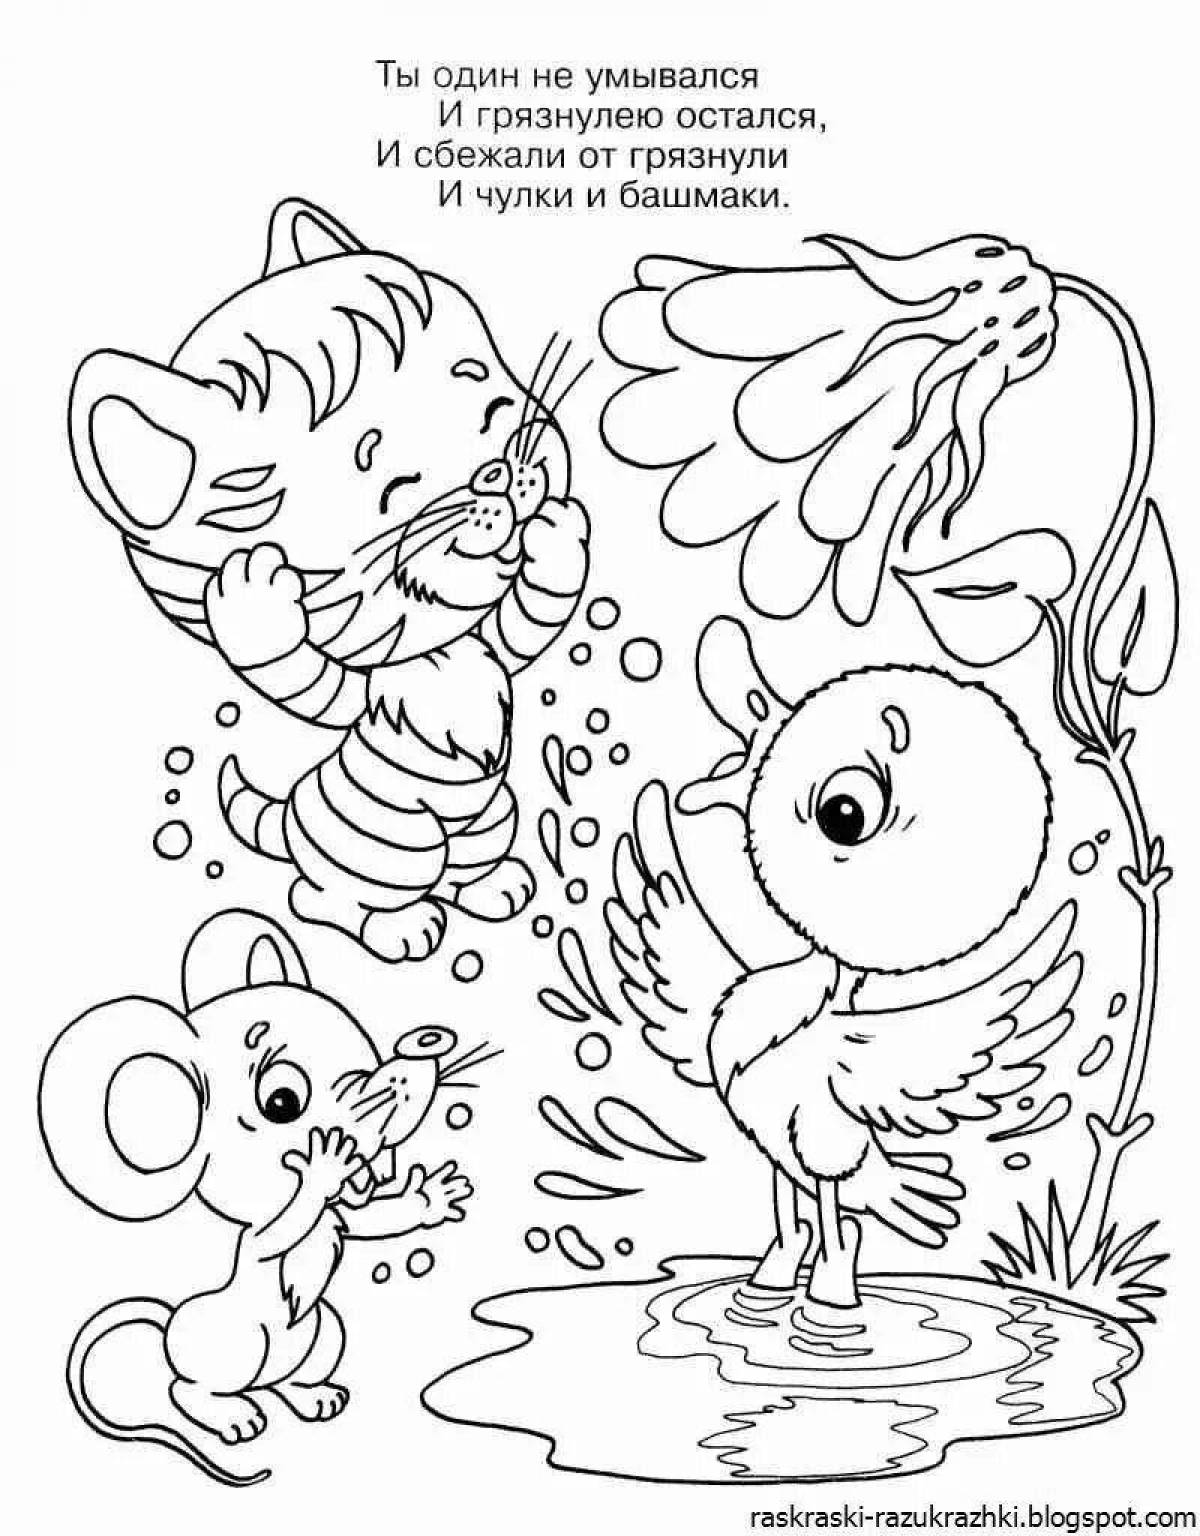 Color explosion Chukovsky coloring book